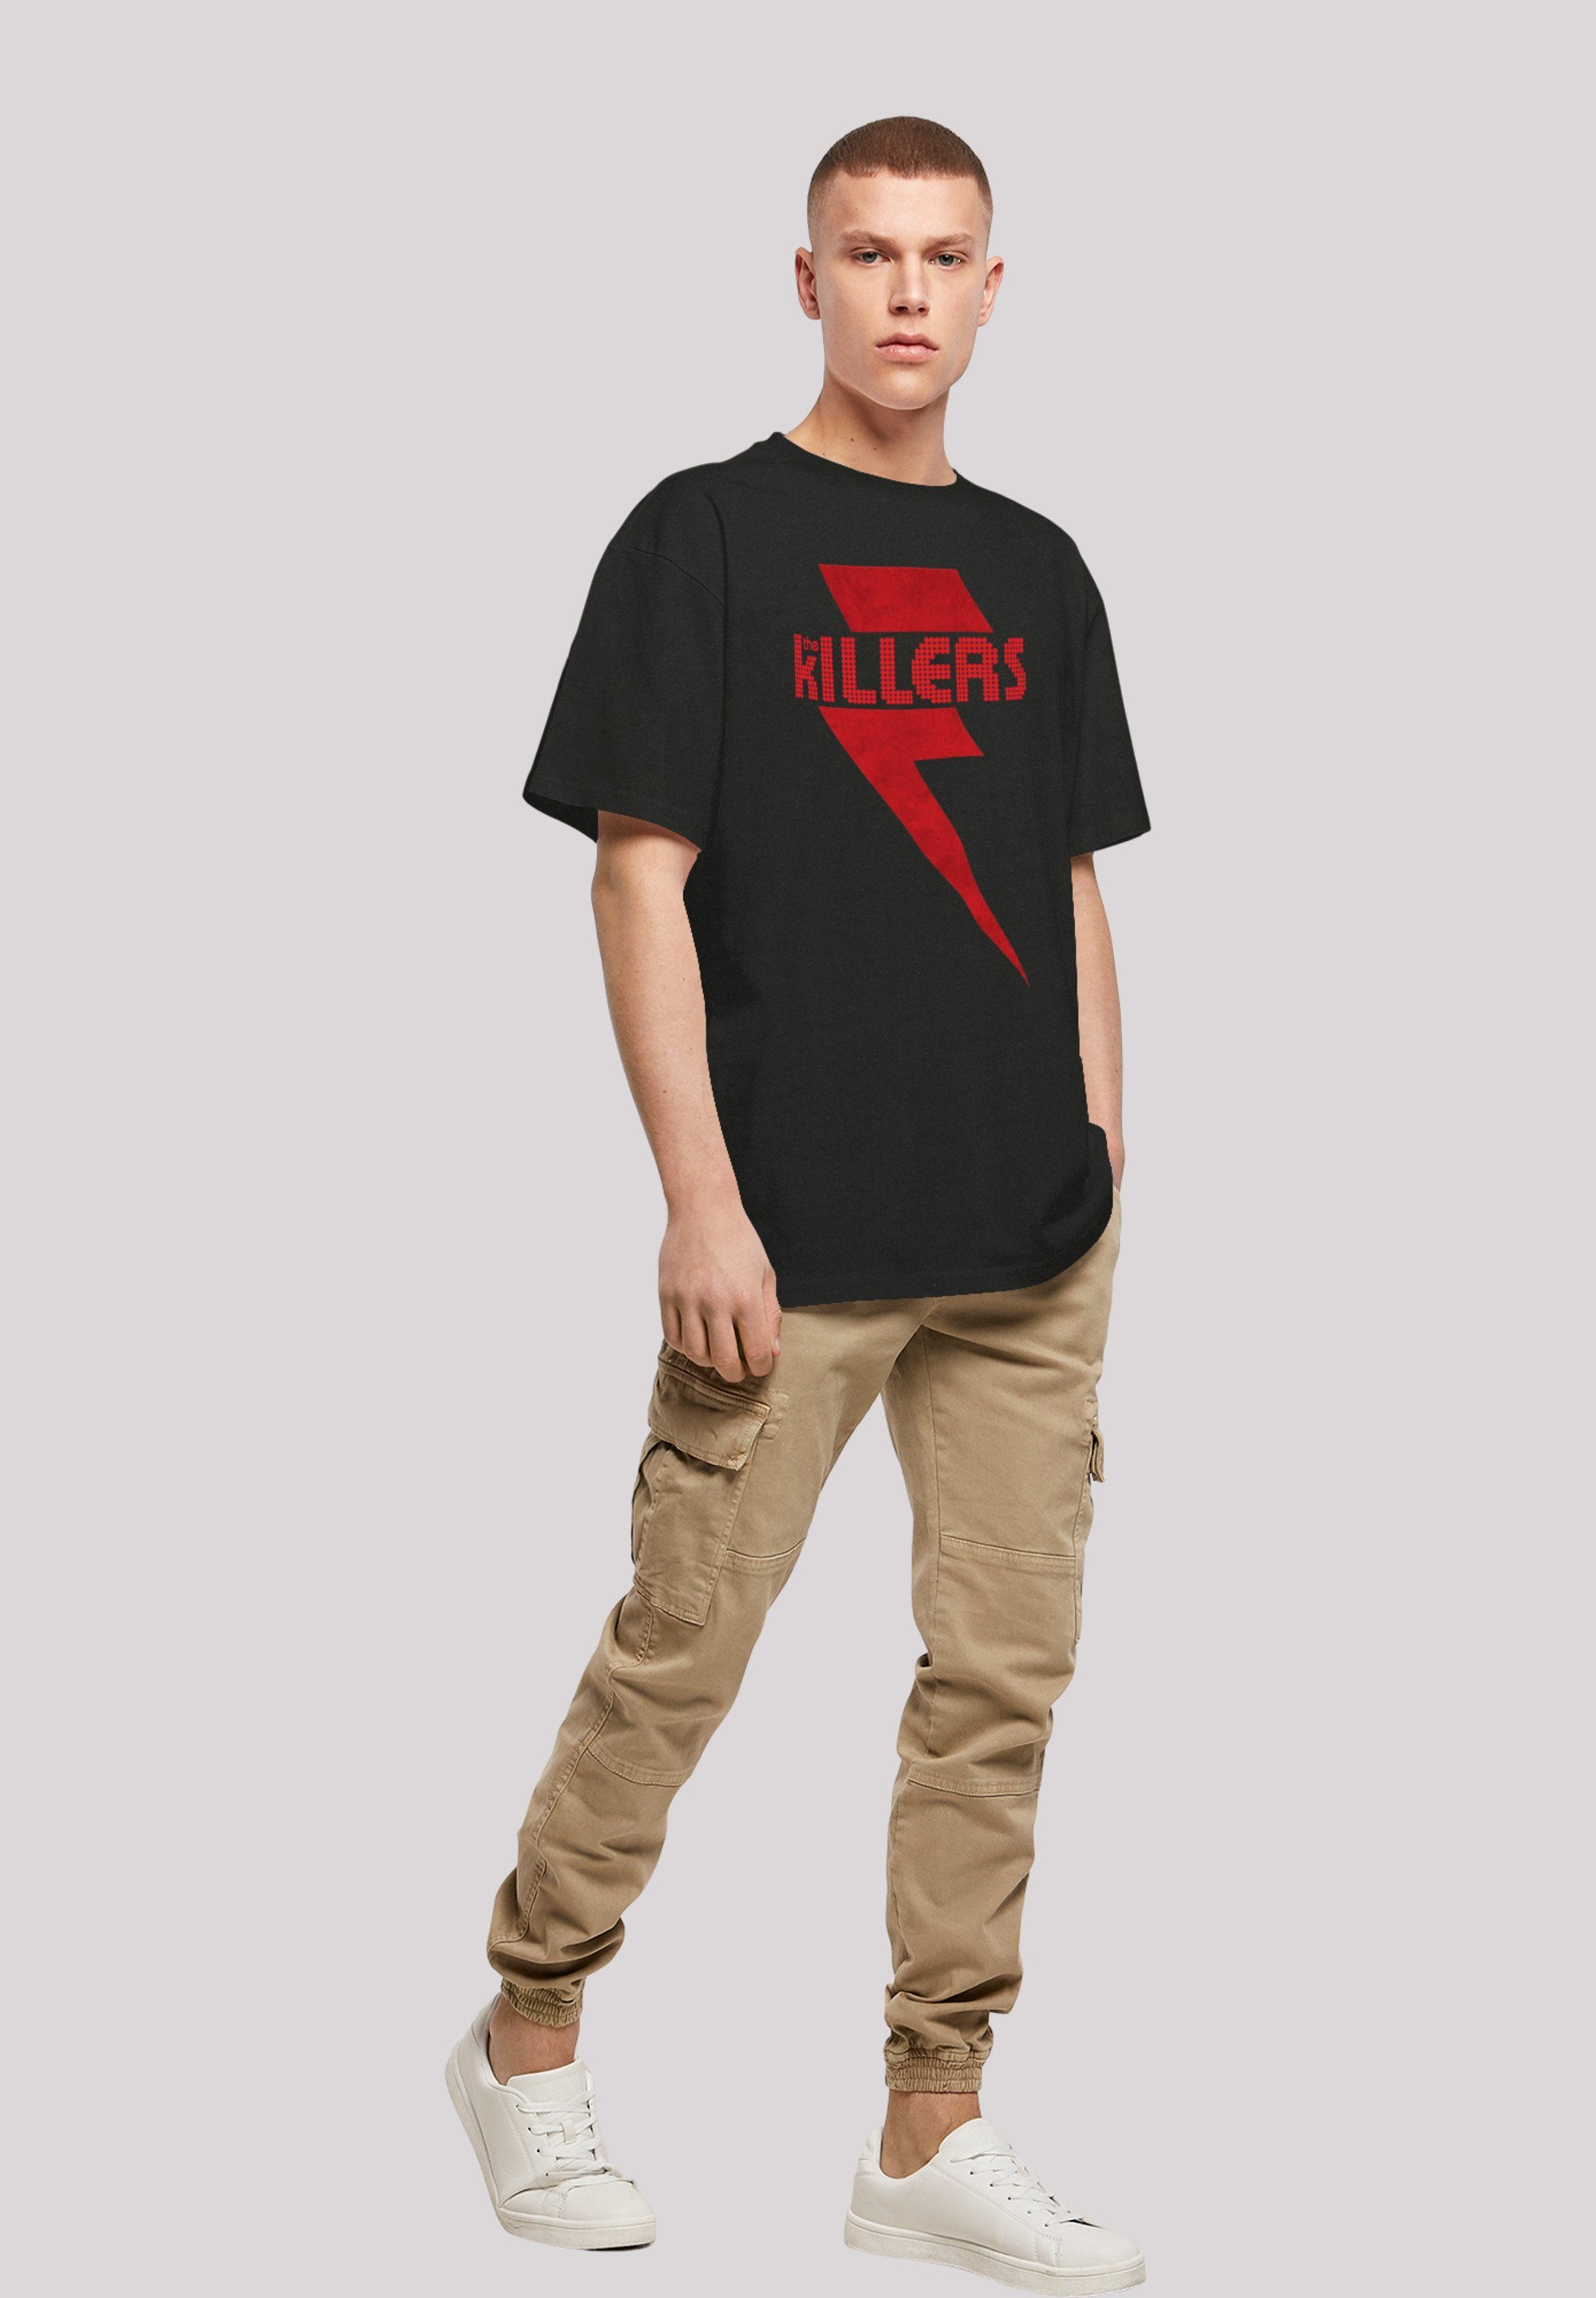 T-Shirt Rock Killers Print Band The F4NT4STIC Red Bolt schwarz